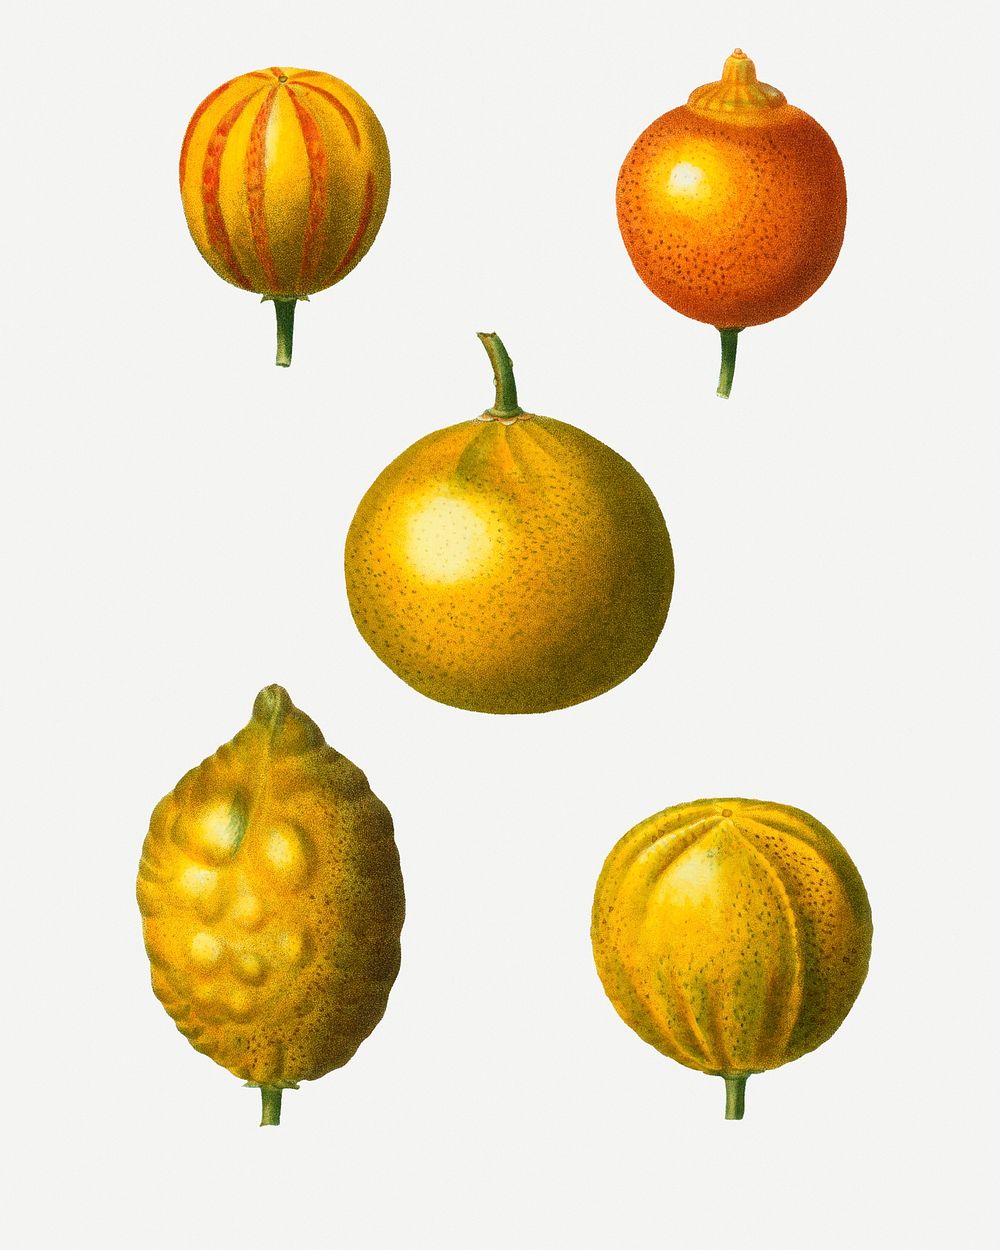 Vintage various citrus fruits illustration